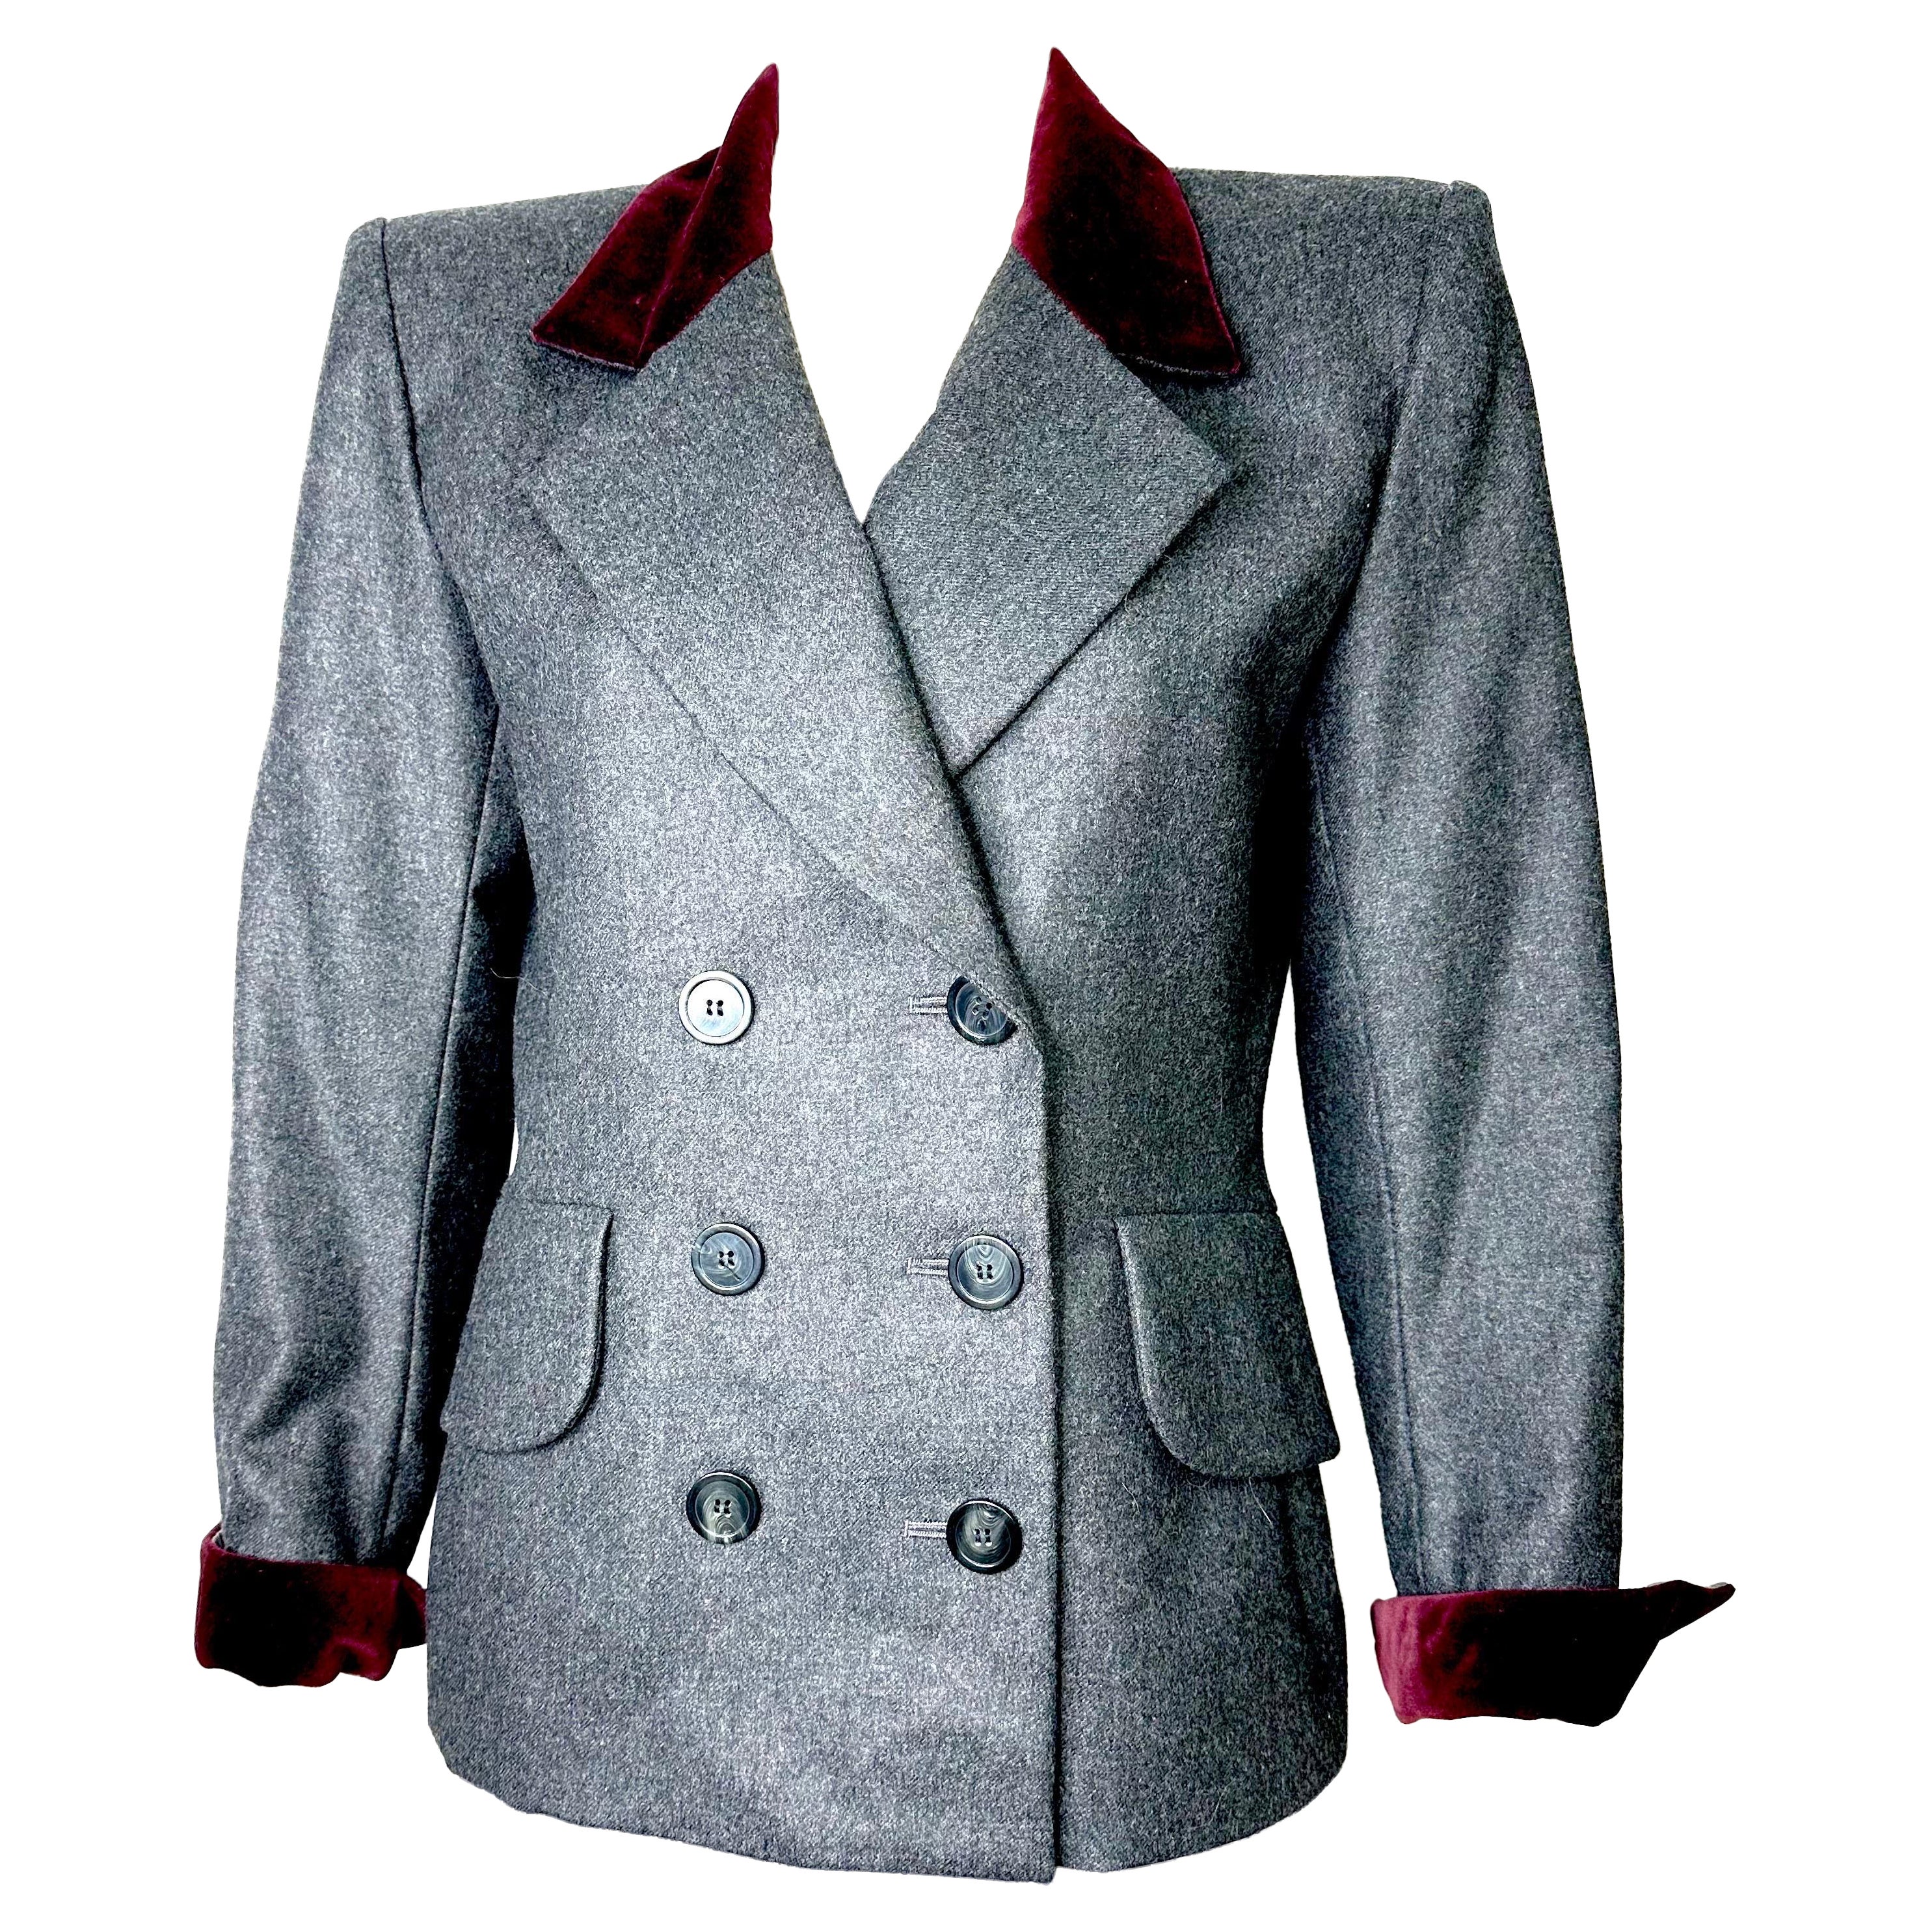 Vintage Yves saint Laurent grey wool blazer from 1990